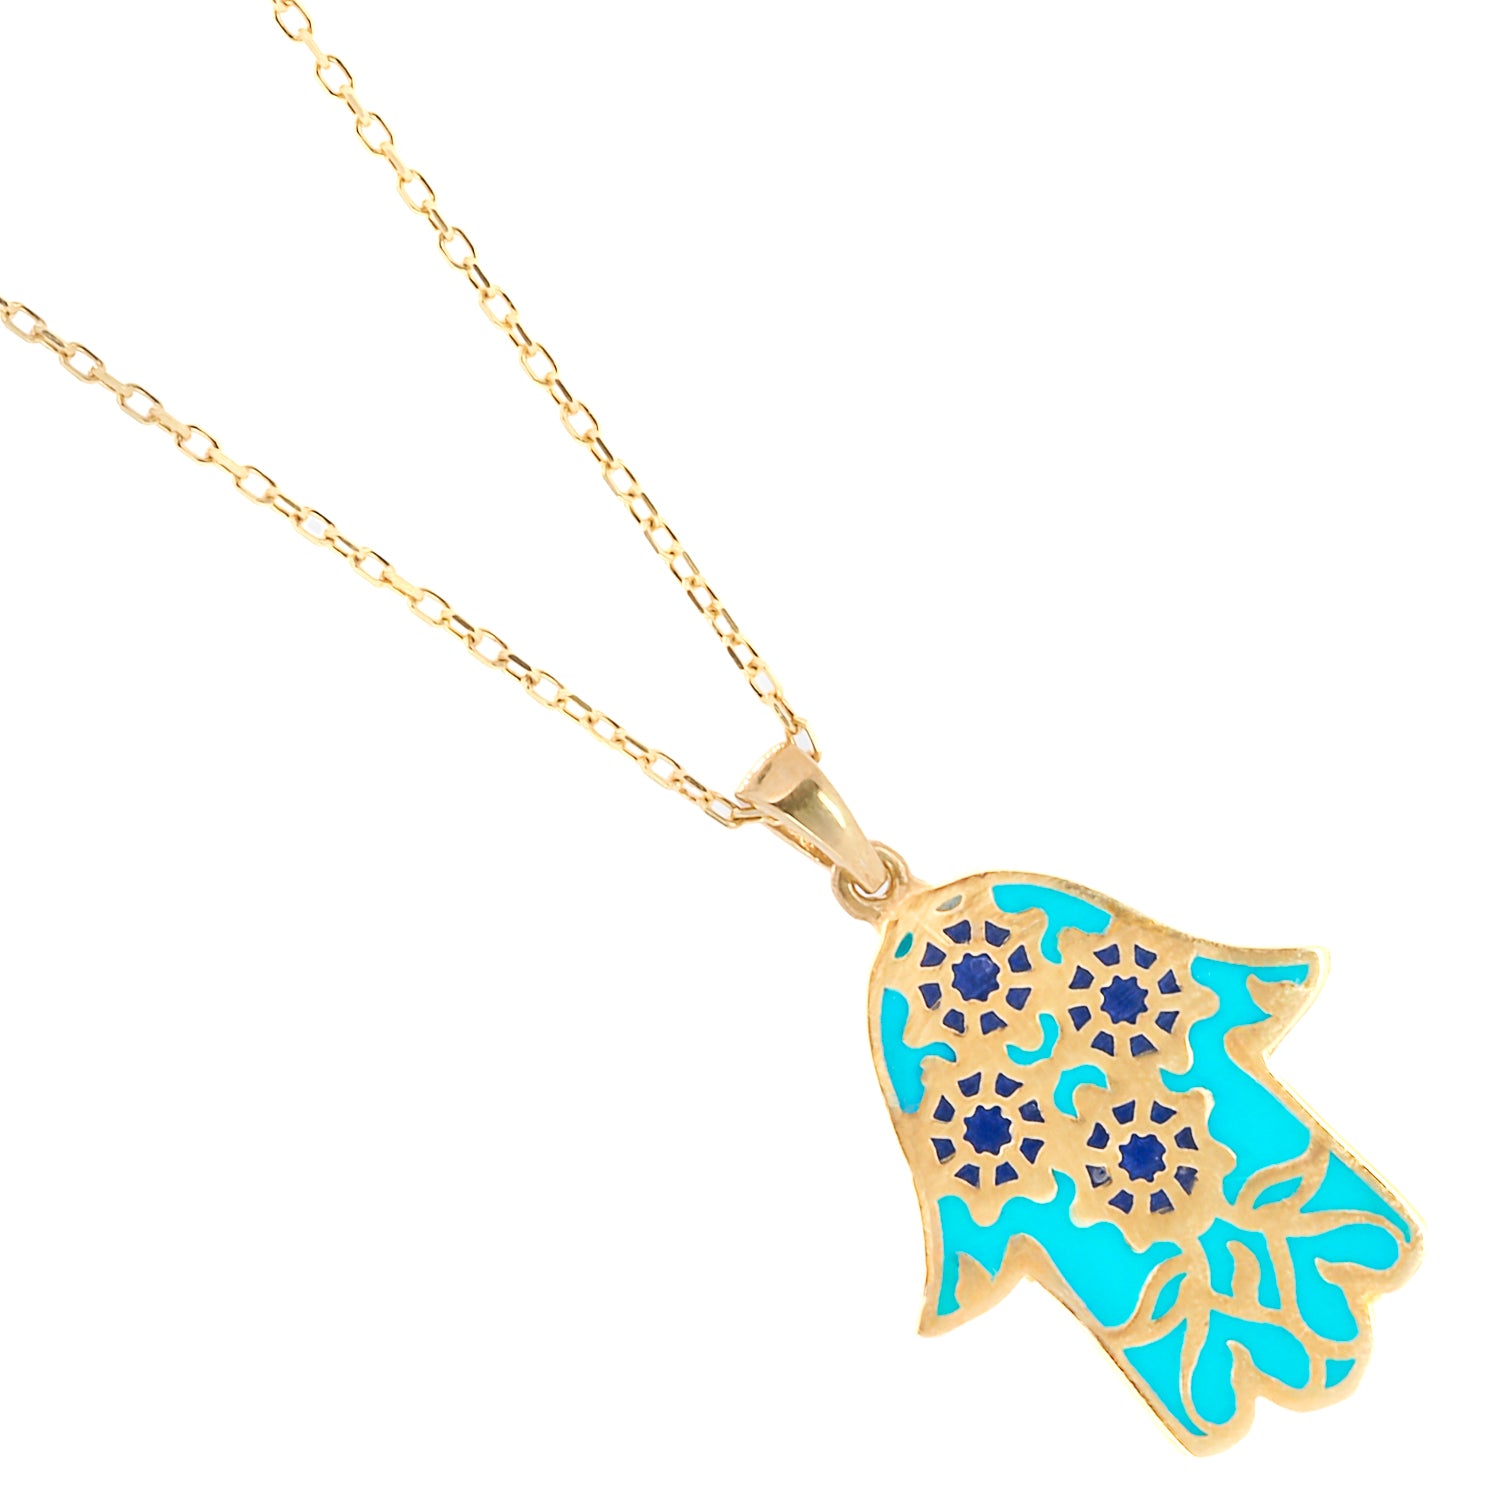 The Hamsa pendant, symbolizing protection and good vibes, on the Good Vibes Enamel Hamsa Necklace.